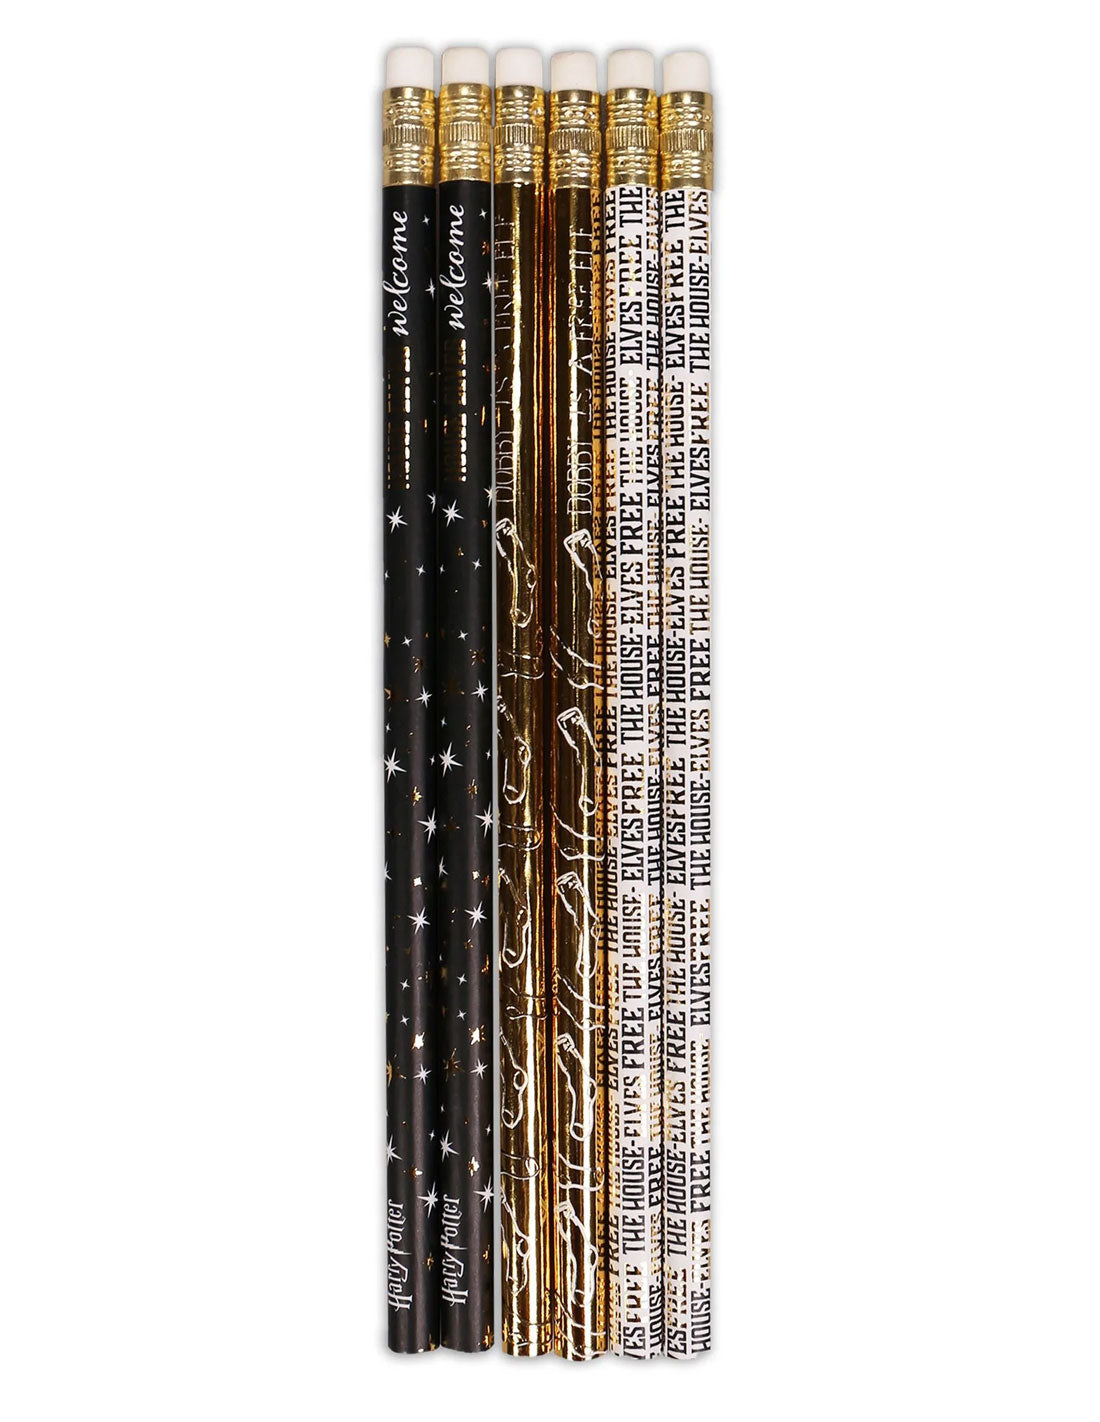 Set of 6 Harry Potter pencils - Dobby